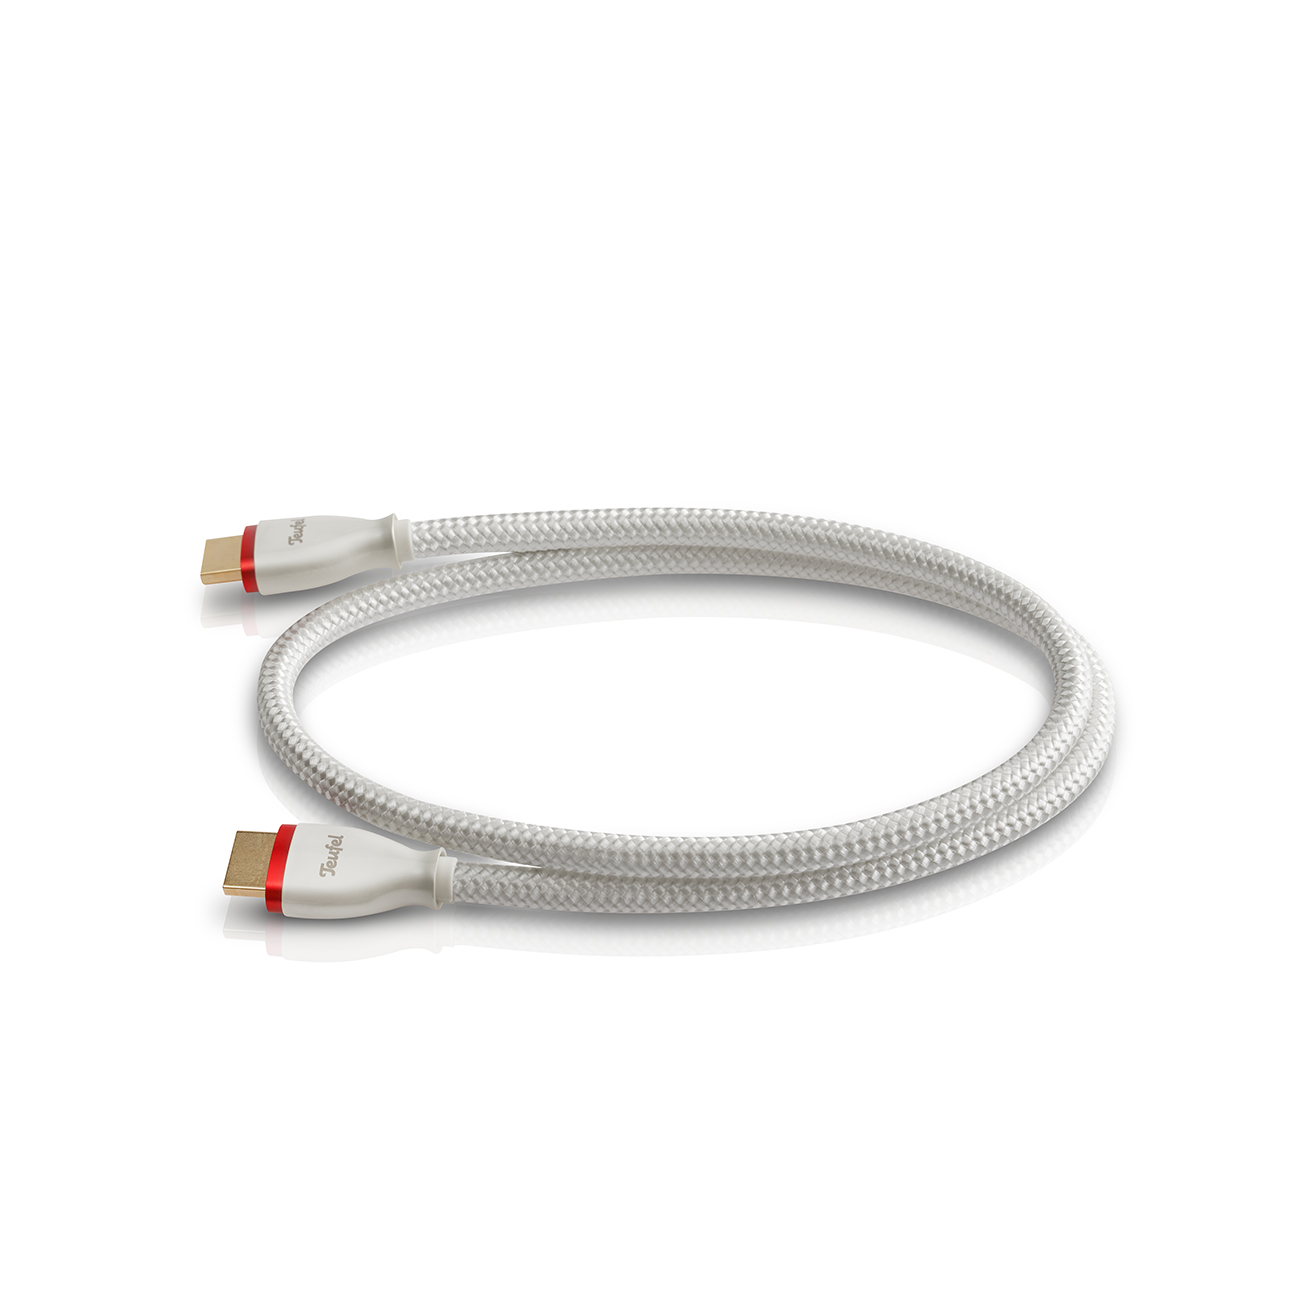 Teufel HDMI 2.1 kabel rond 0,75 m - Highspeed HDMI-kabel, 2.1 specificaties: 4K 3D bij 50/60p en 8K transmissie - wit